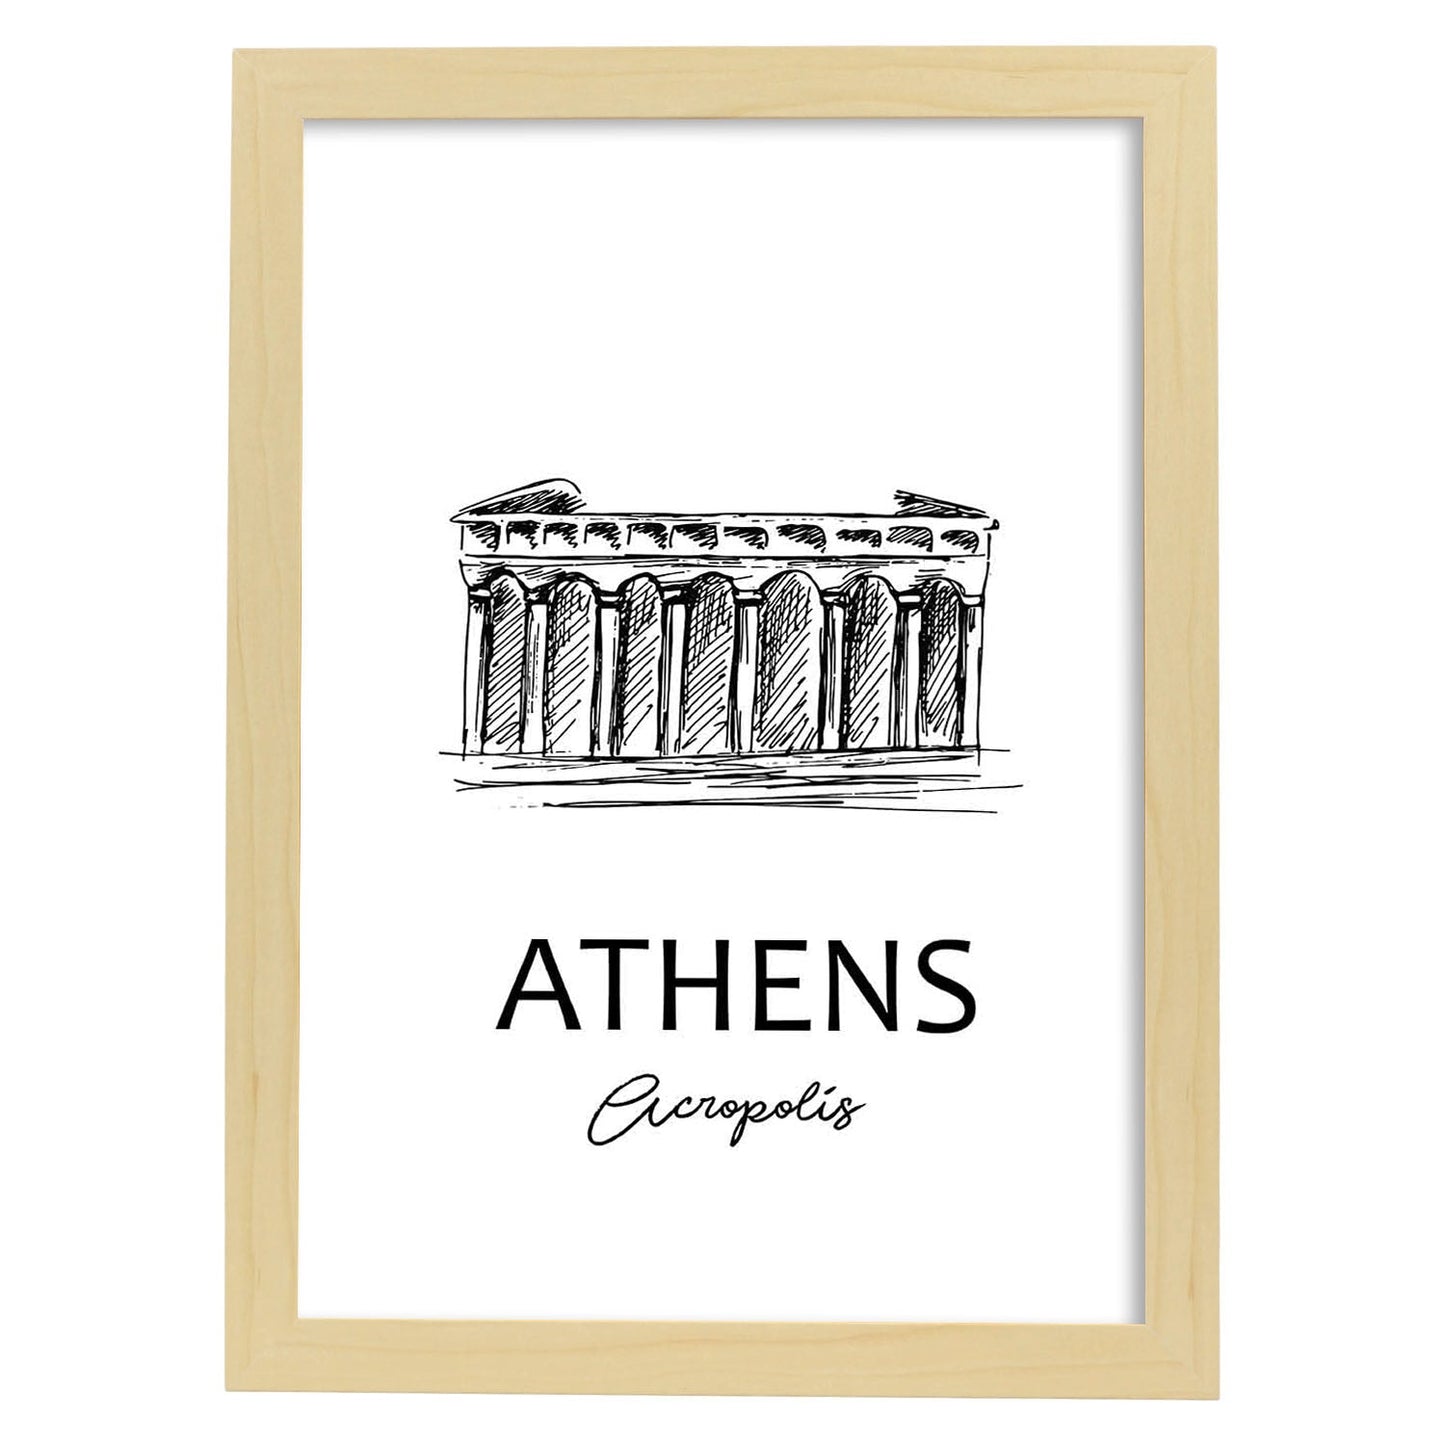 Poster de Atenas - Acropolis. Láminas con monumentos de ciudades.-Artwork-Nacnic-A3-Marco Madera clara-Nacnic Estudio SL